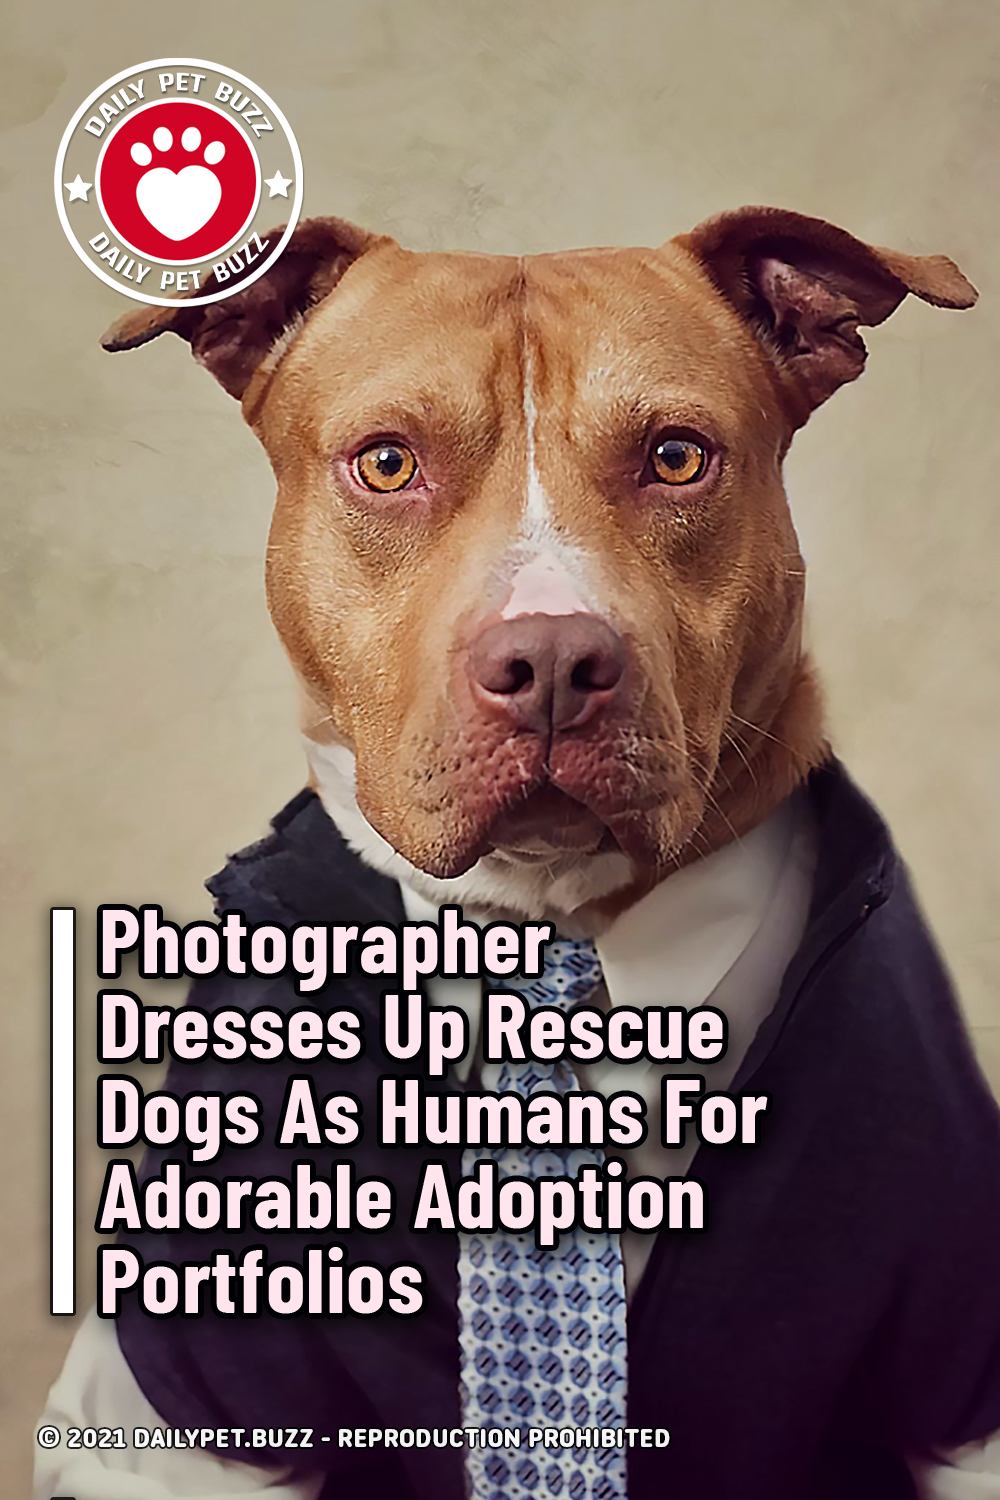 Photographer Dresses Up Rescue Dogs As Humans For Adorable Adoption Portfolios